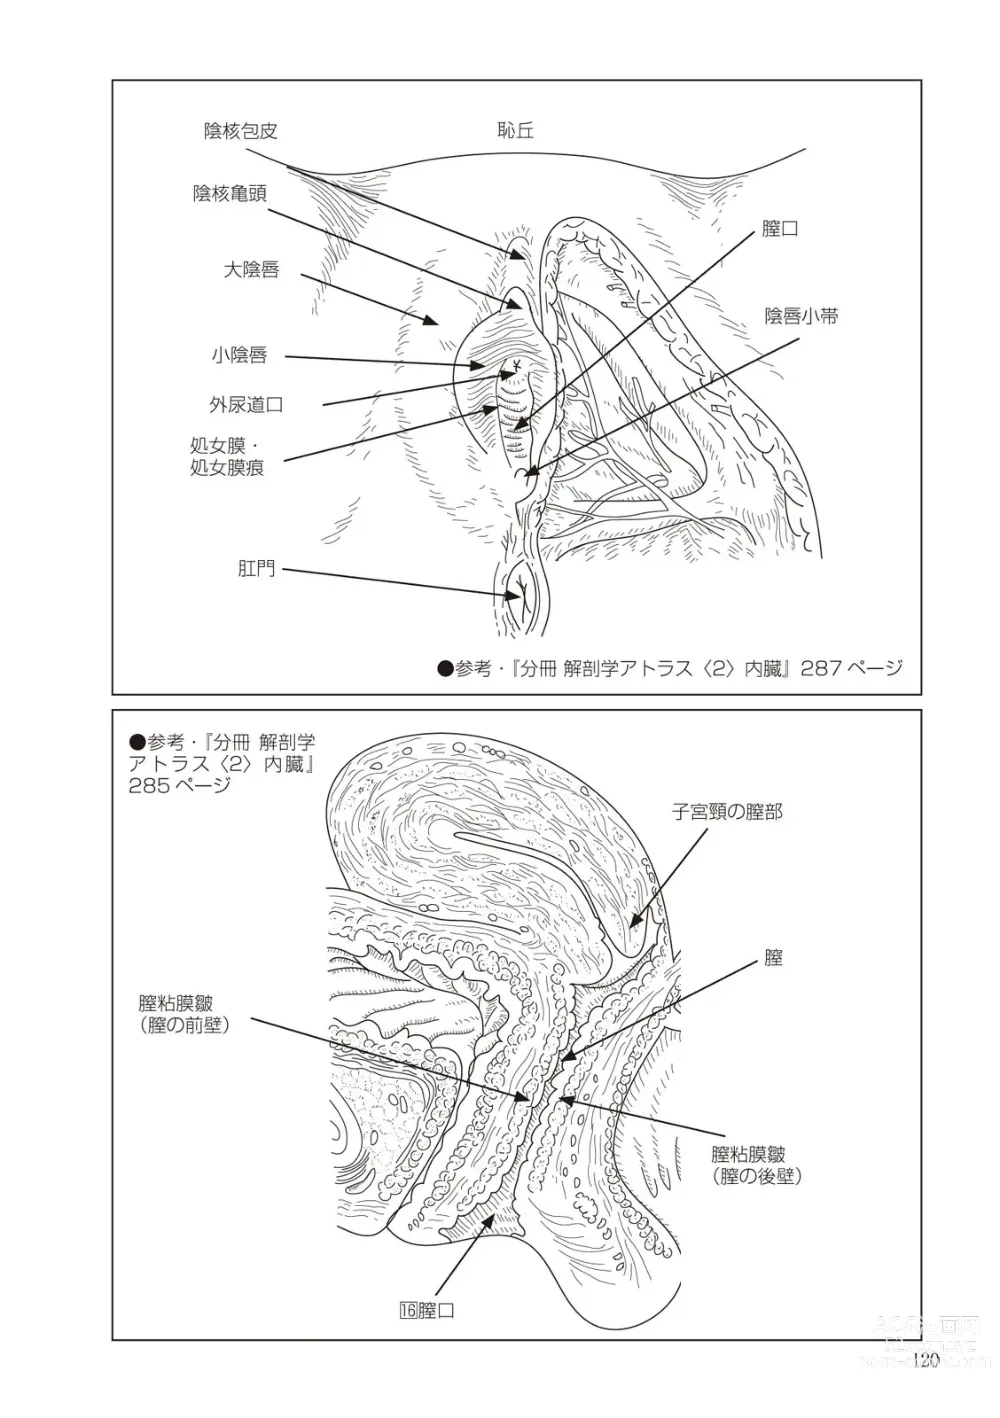 Page 120 of manga 大人のお医者さんごっこ 検査・測定編